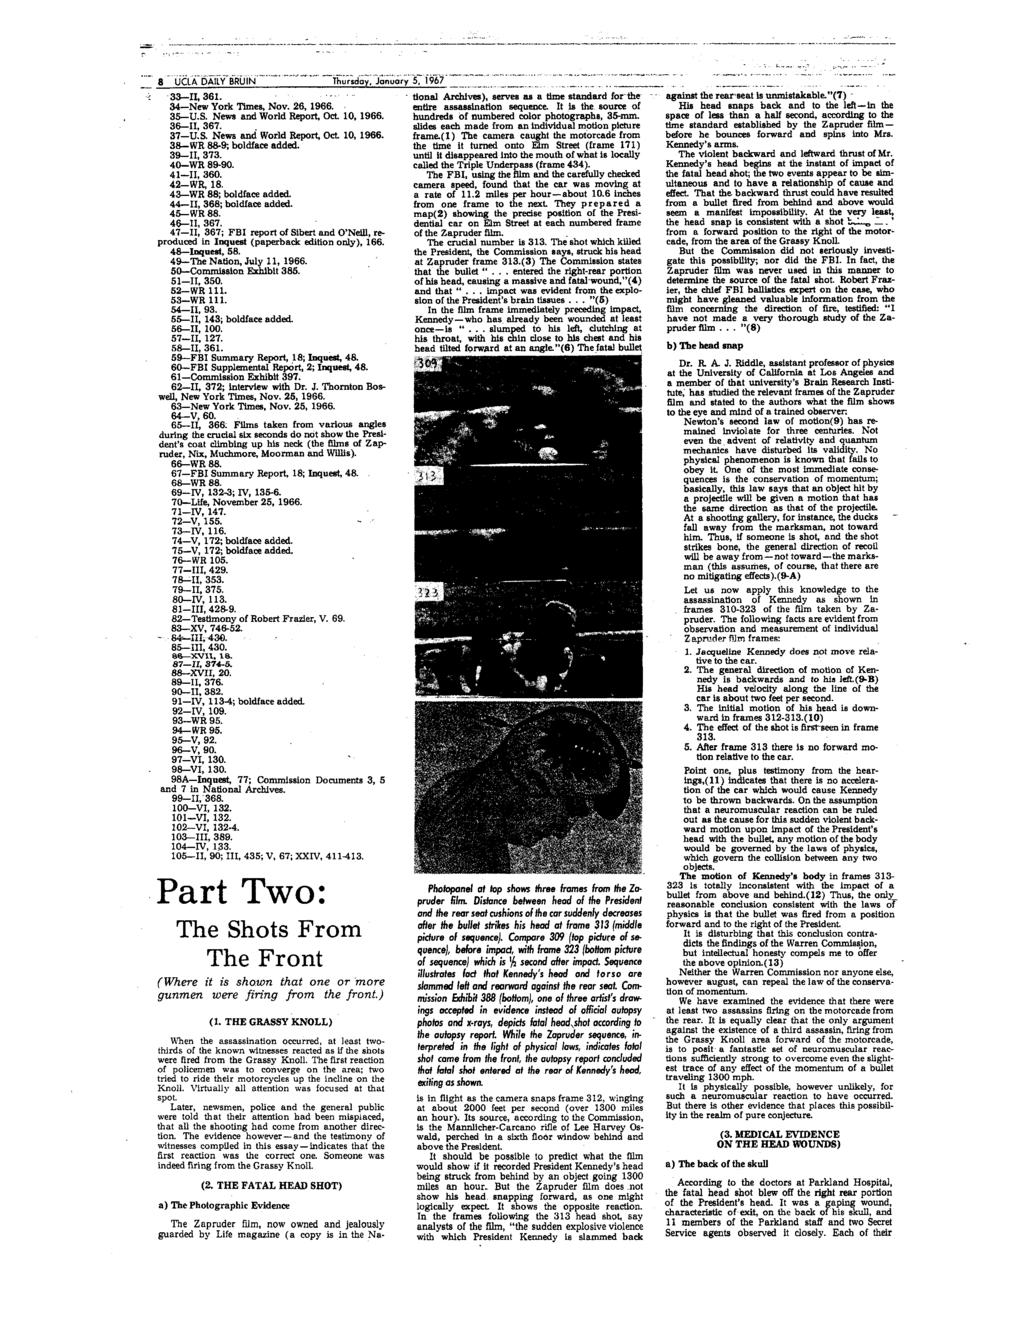 8 UCLA DAILY BRUIN 361. 34 New York Times, Nov. 26, 1966. 35 U.S. News and World Report, Oct 10, 1966. 36-11, 367. 37 U.S. News and World Report, Oct 10, 1966. 38 WR 88-9; boldface added. 39-11, 373.